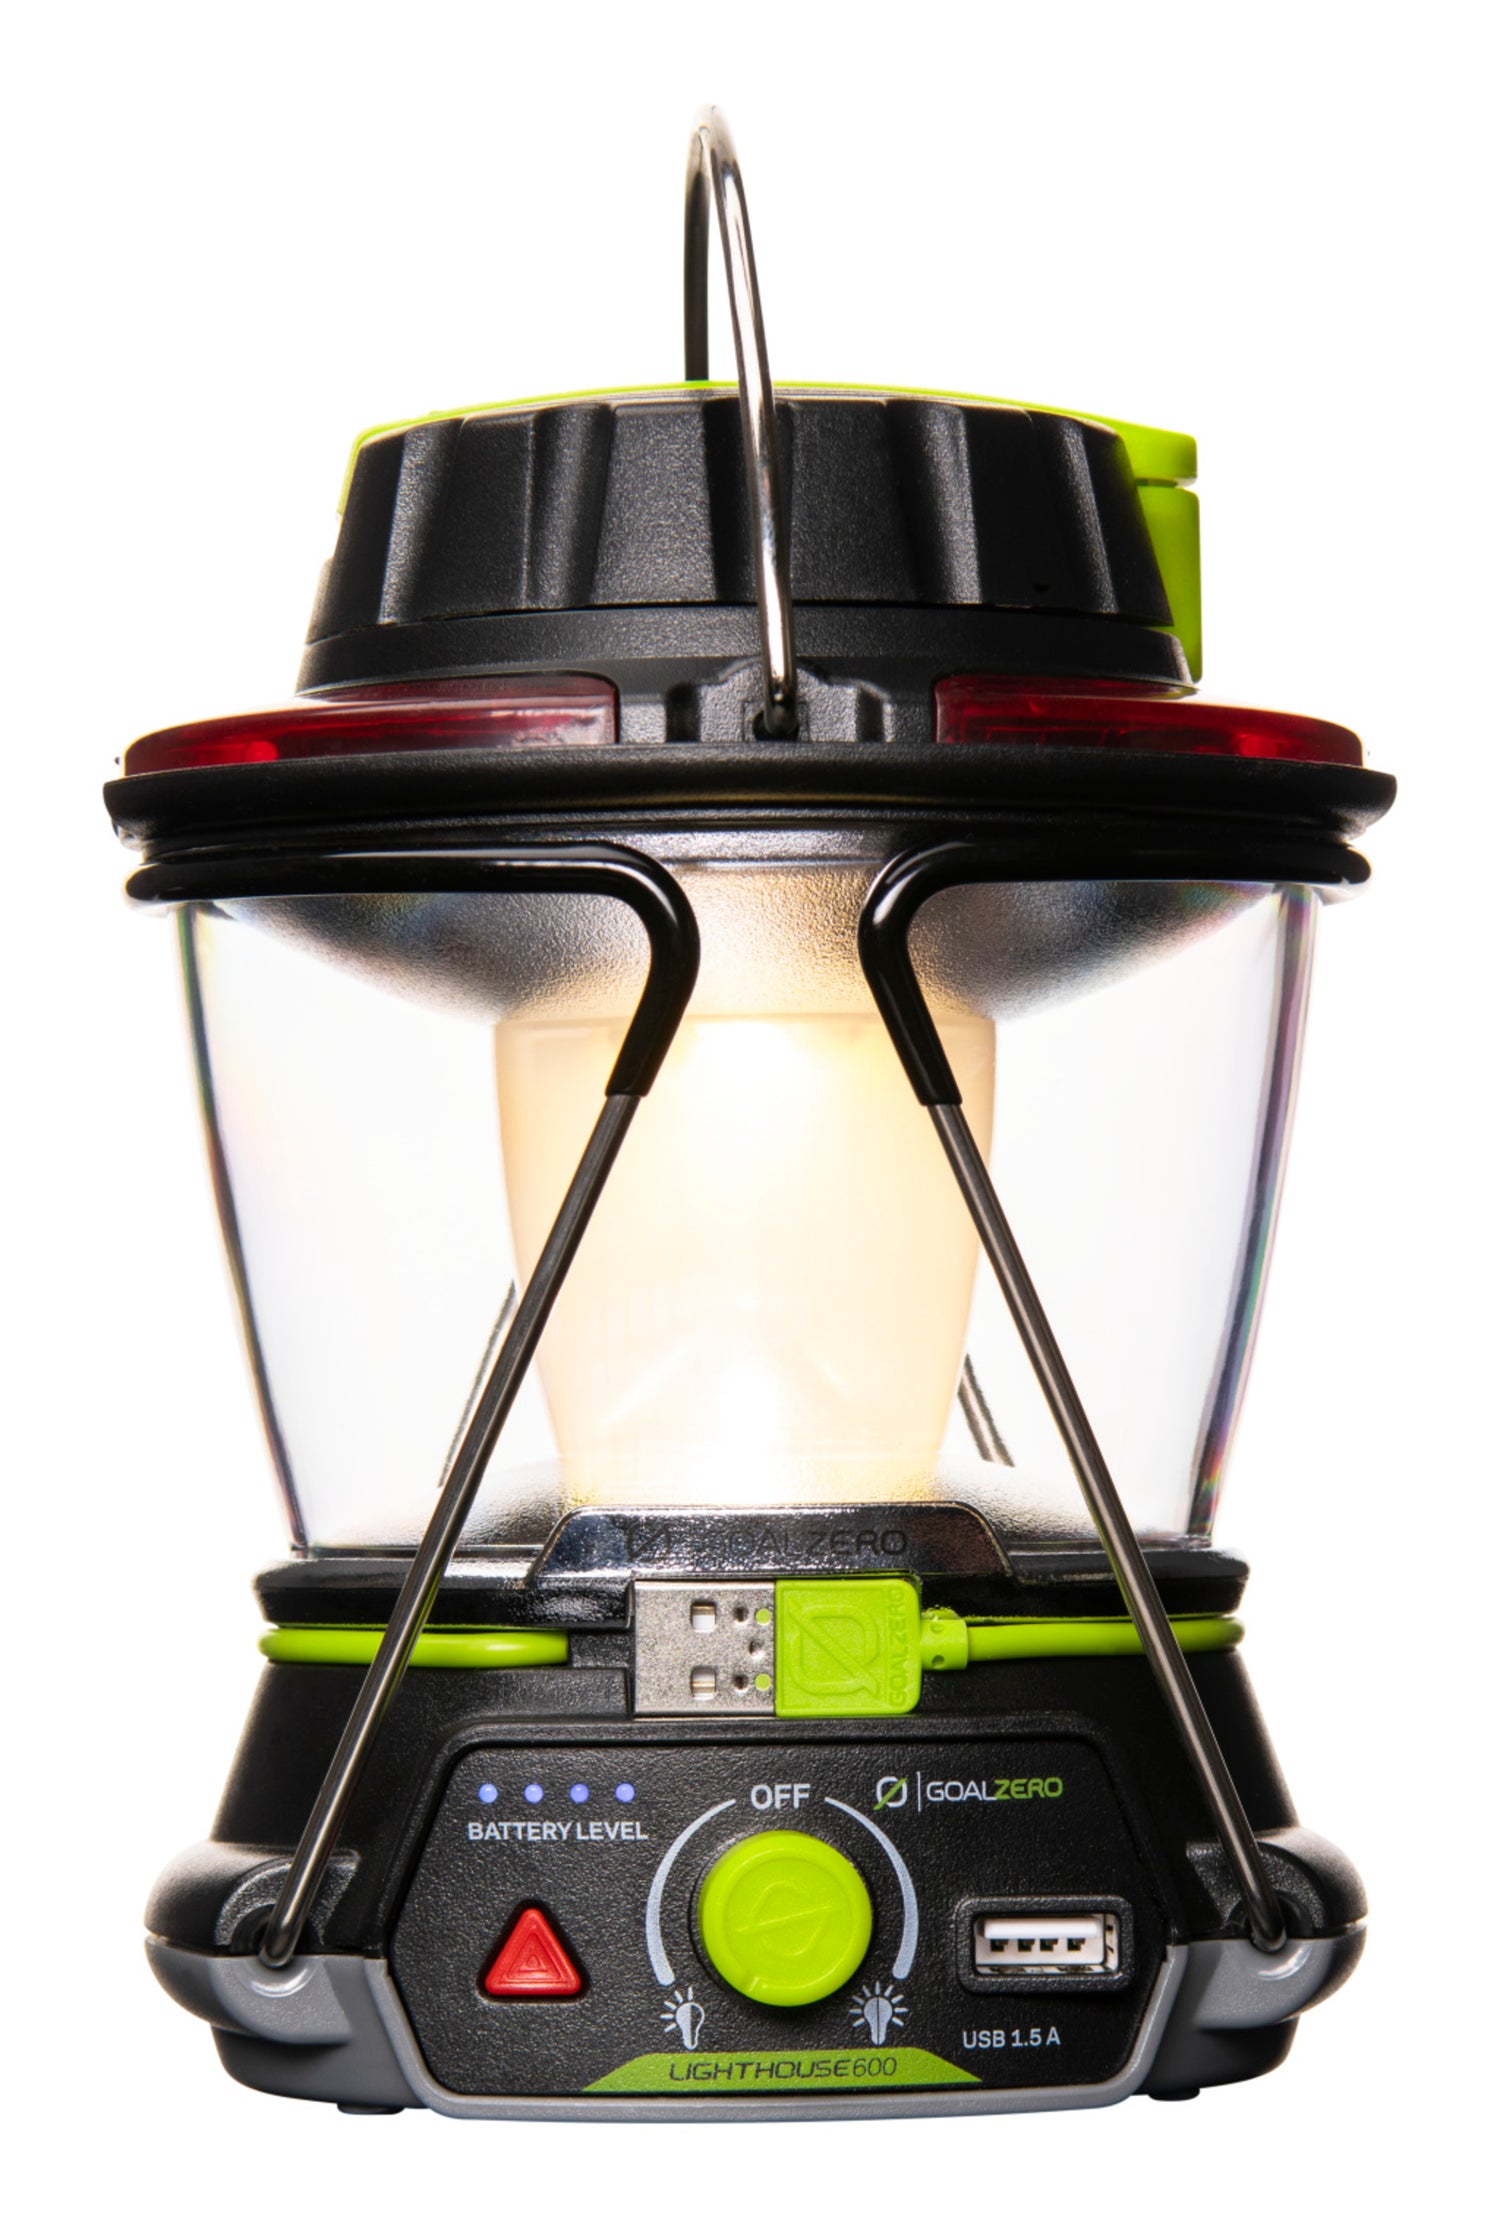 GoalZero Lighthouse 600 Lantern